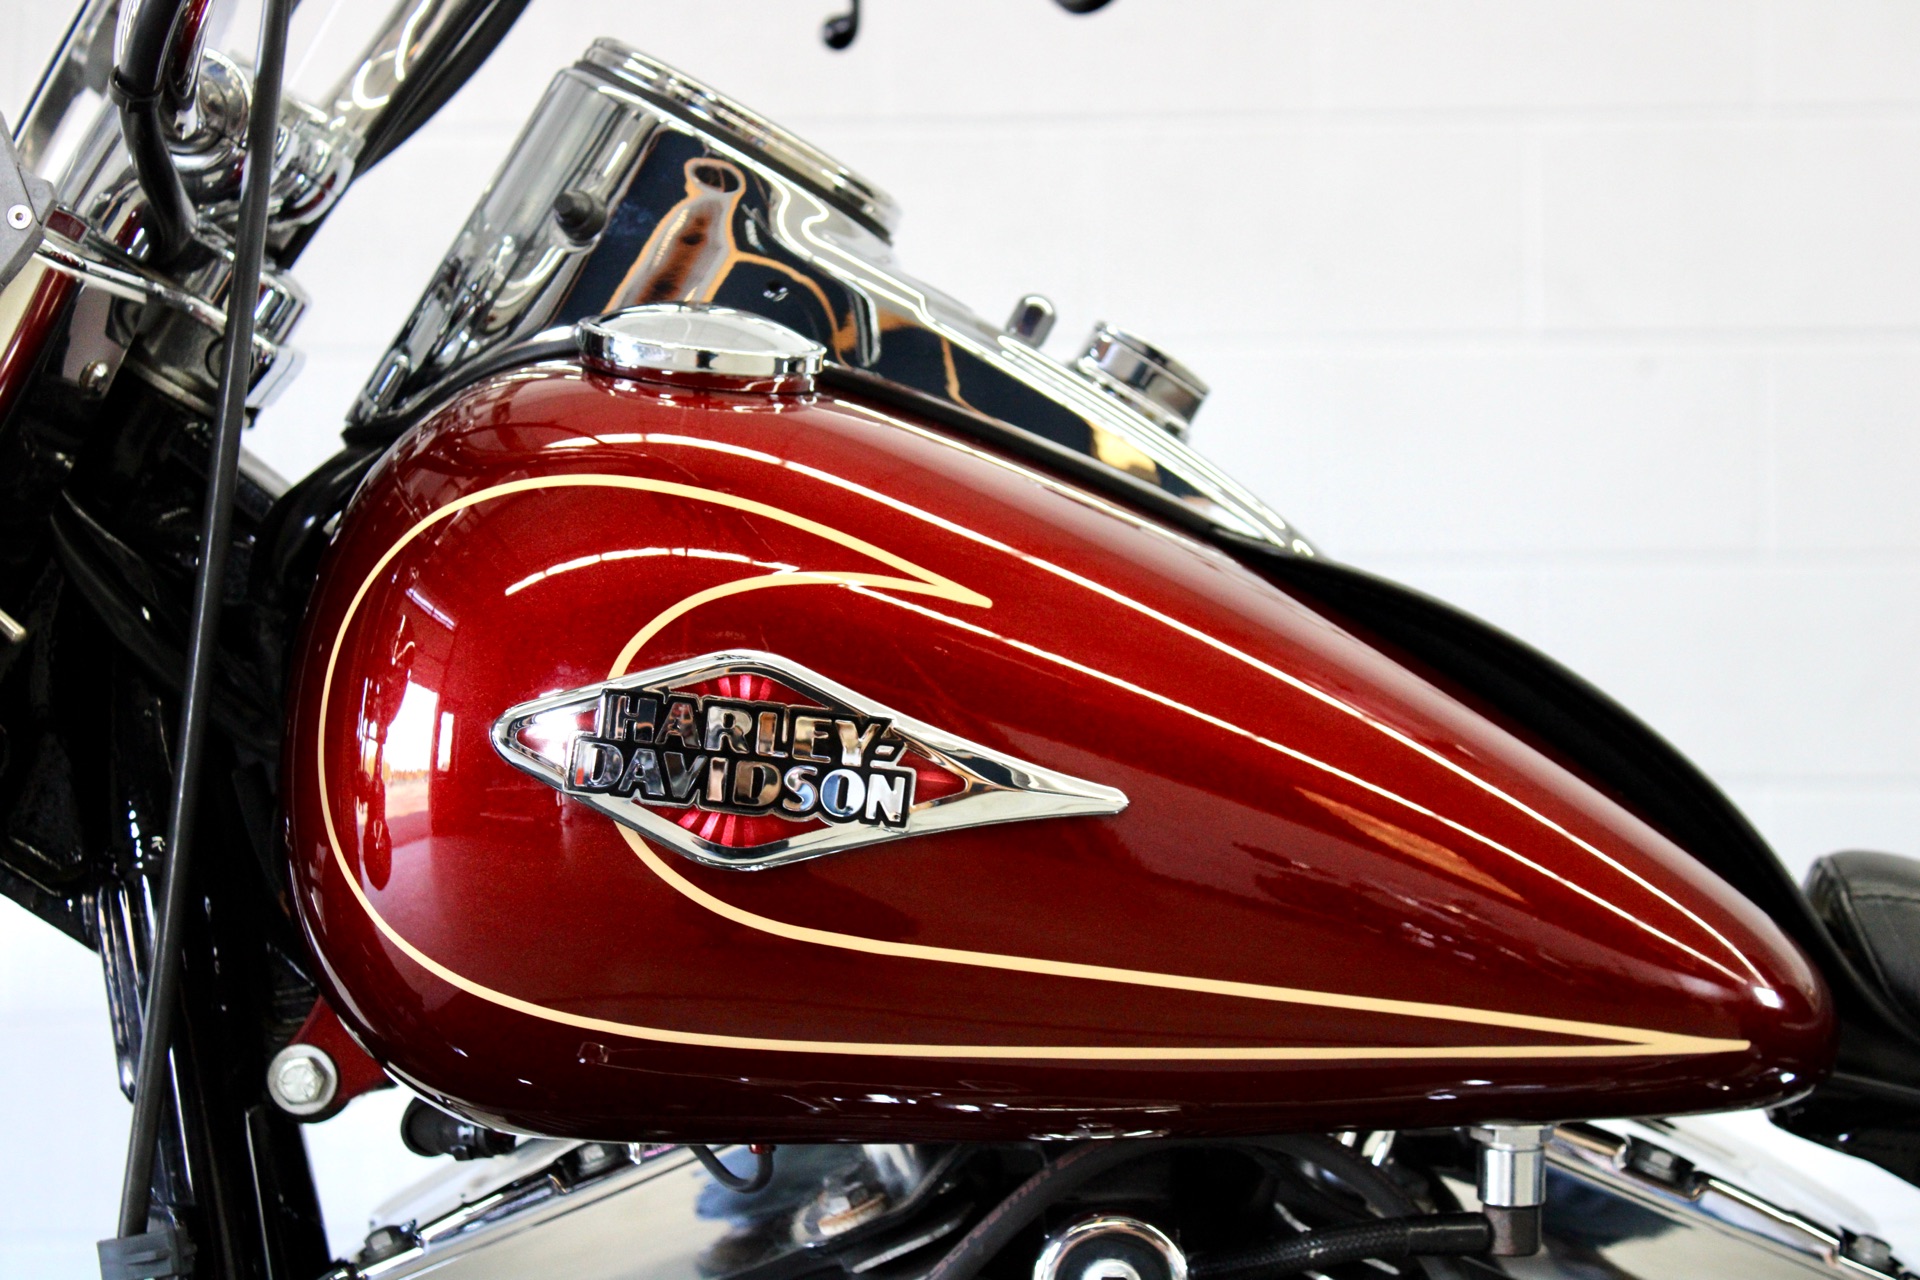 2009 Harley-Davidson Heritage Softail® Classic in Fredericksburg, Virginia - Photo 18